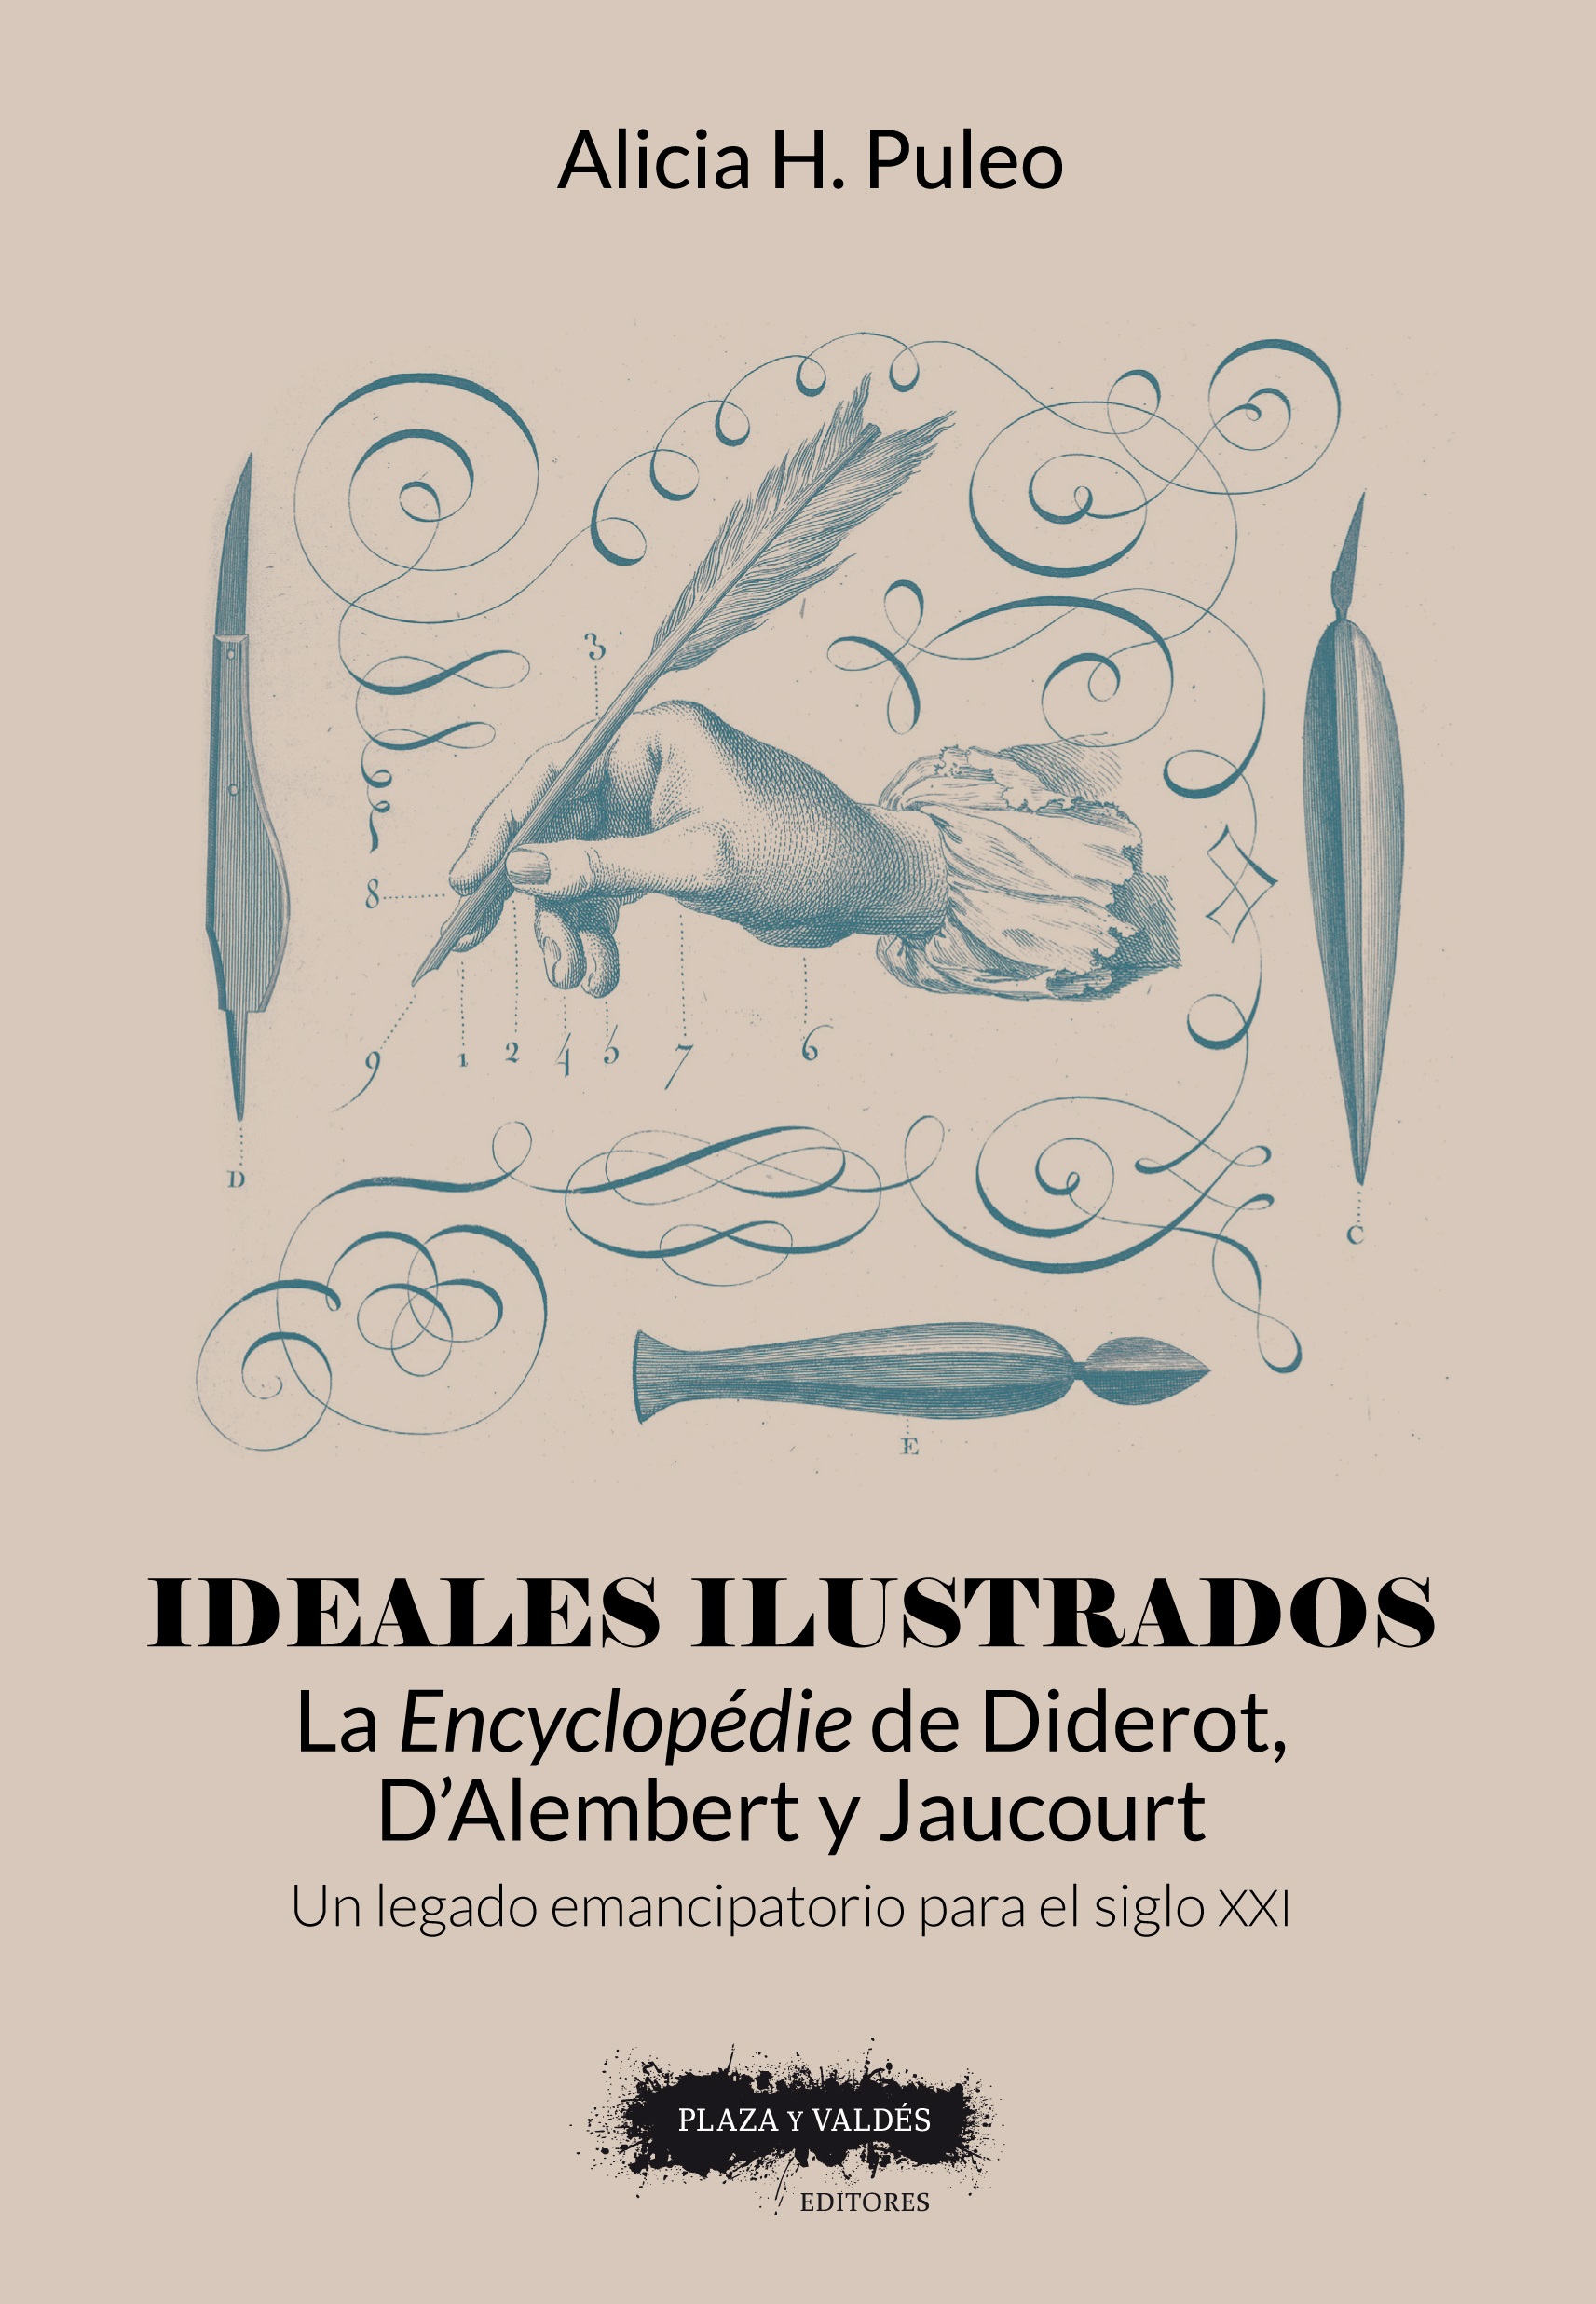 Ideales ilustrados: la Encyclopédie de Diderot, D’Alembert y Jaucourt